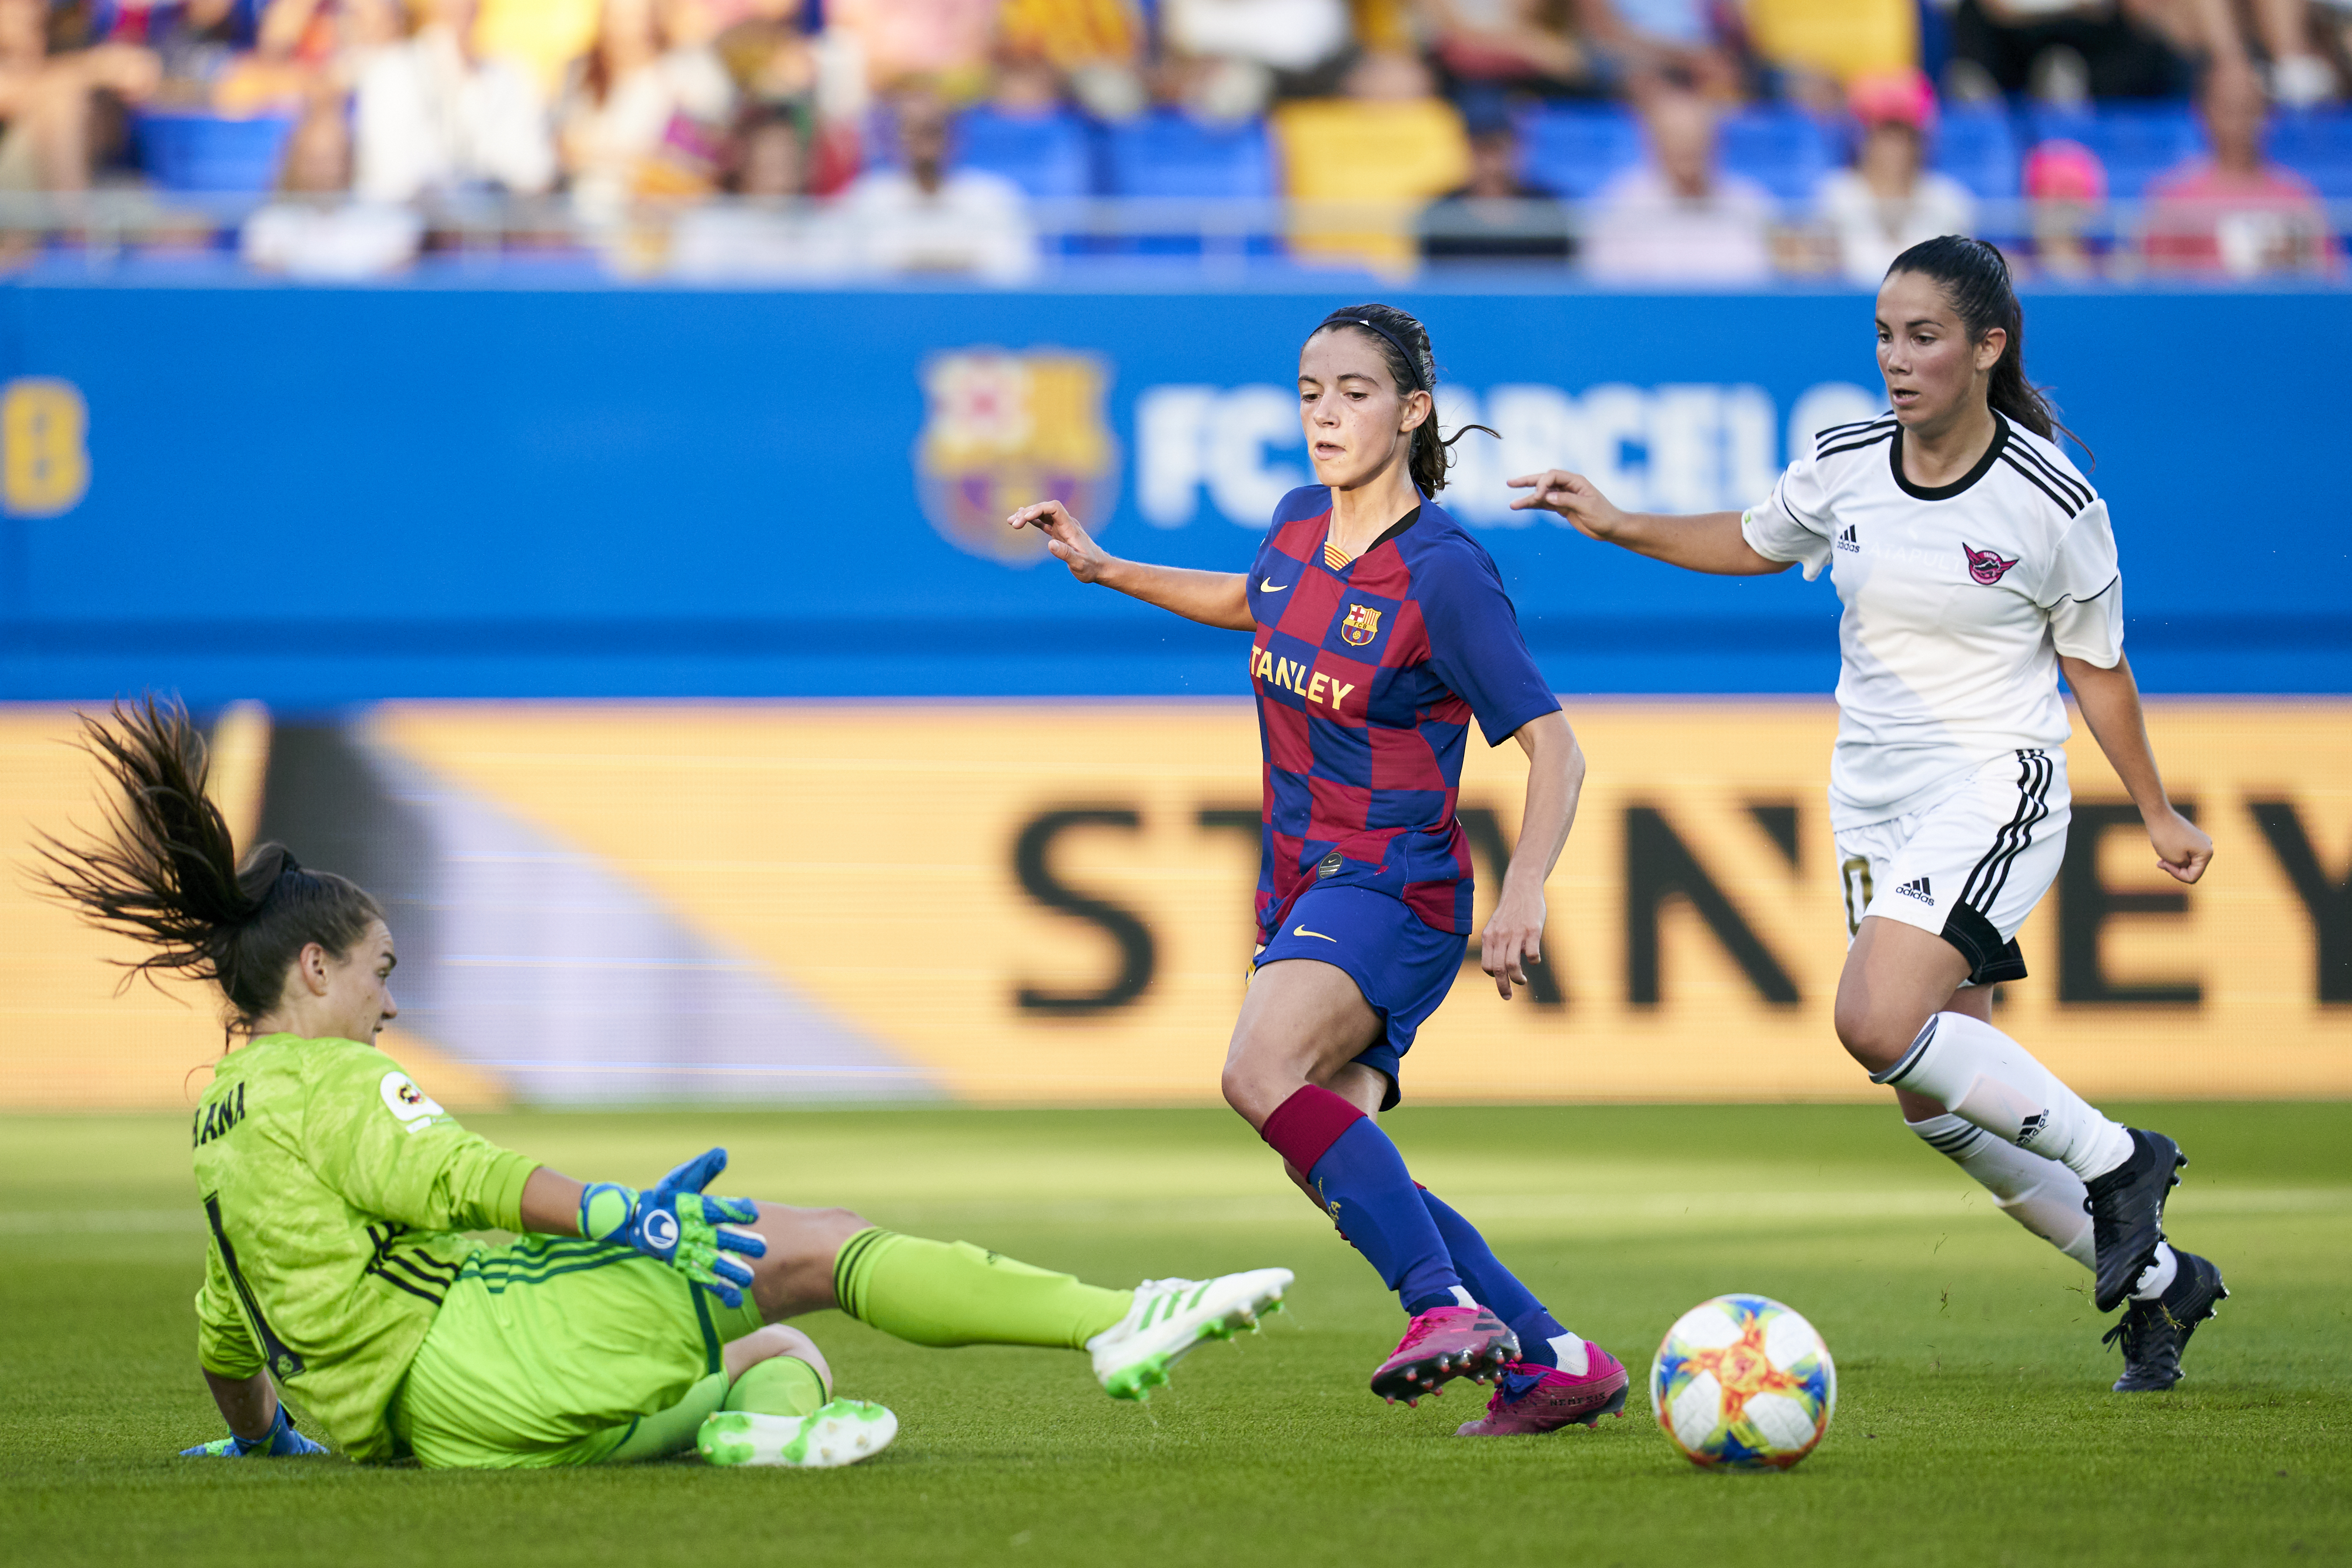 فیلم بازی فوتبال زنان رئال مادرید و زنان بارسلونا